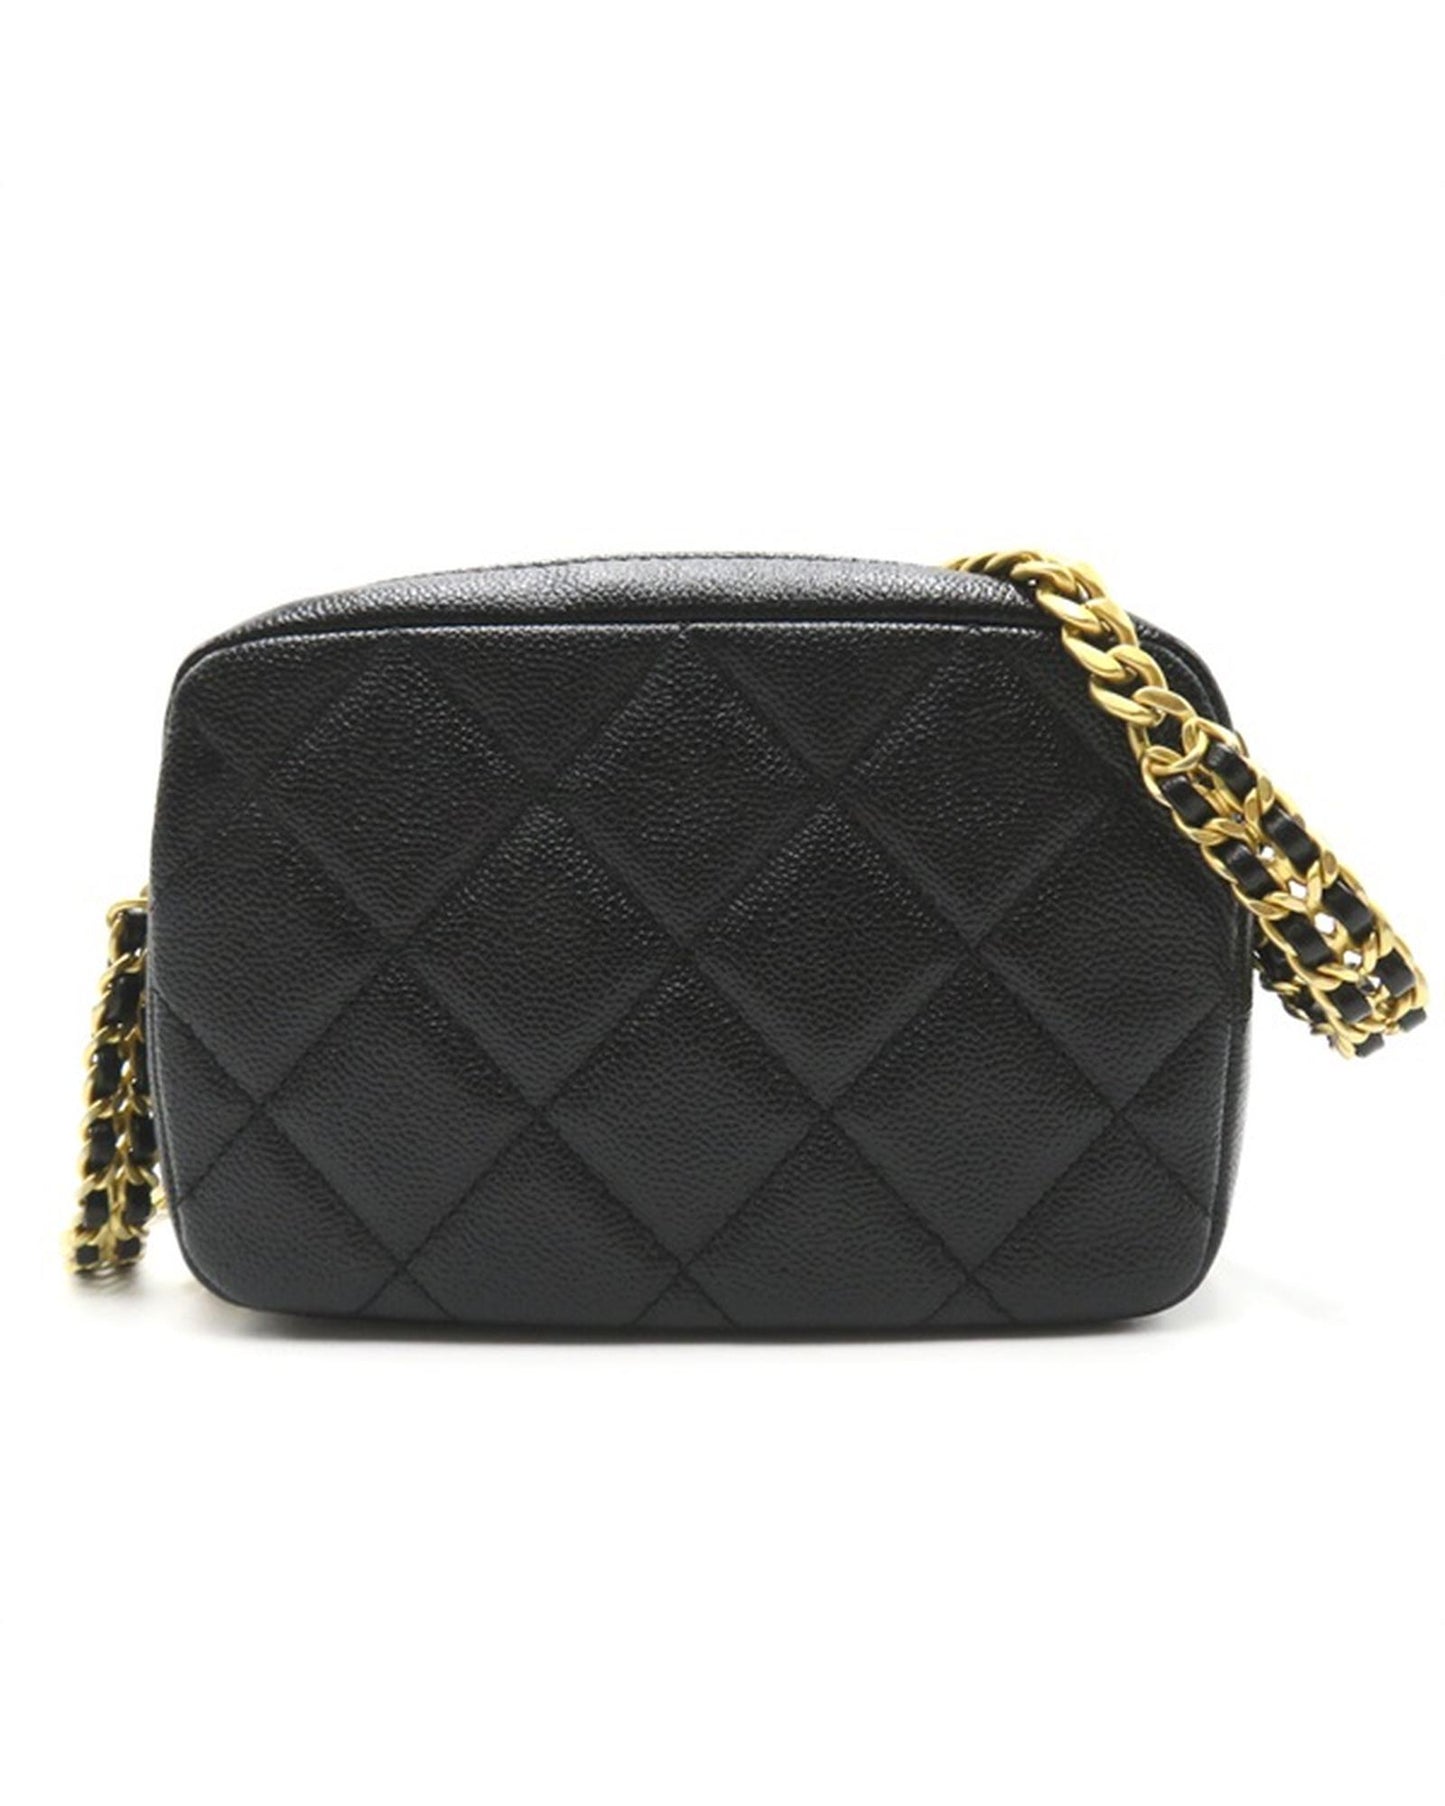 Chanel Women's Black Caviar Camera Bag with Chanel CC Logo in Black